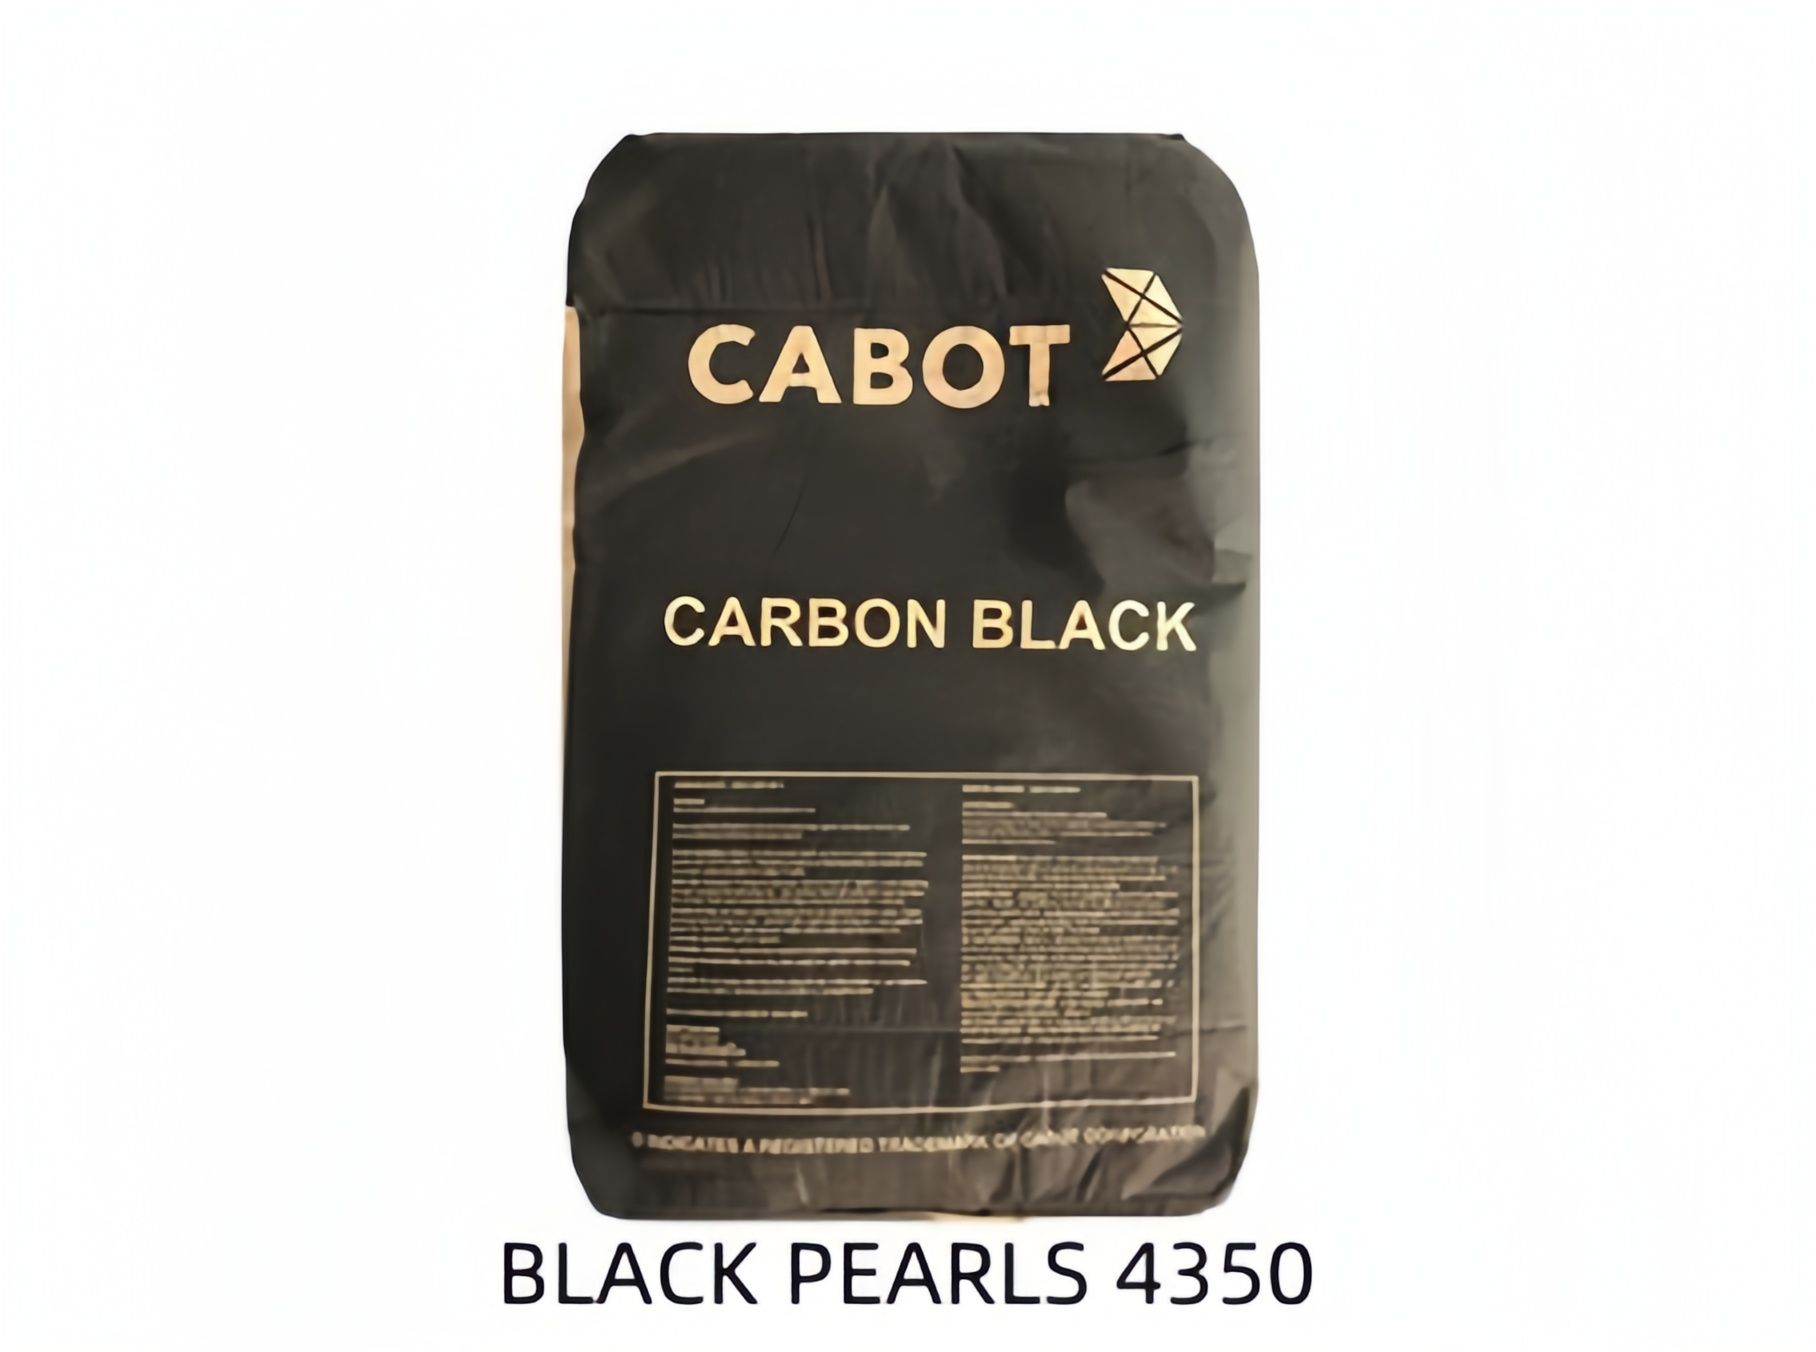 卡博特碳黑BLACK PEARLS 4350